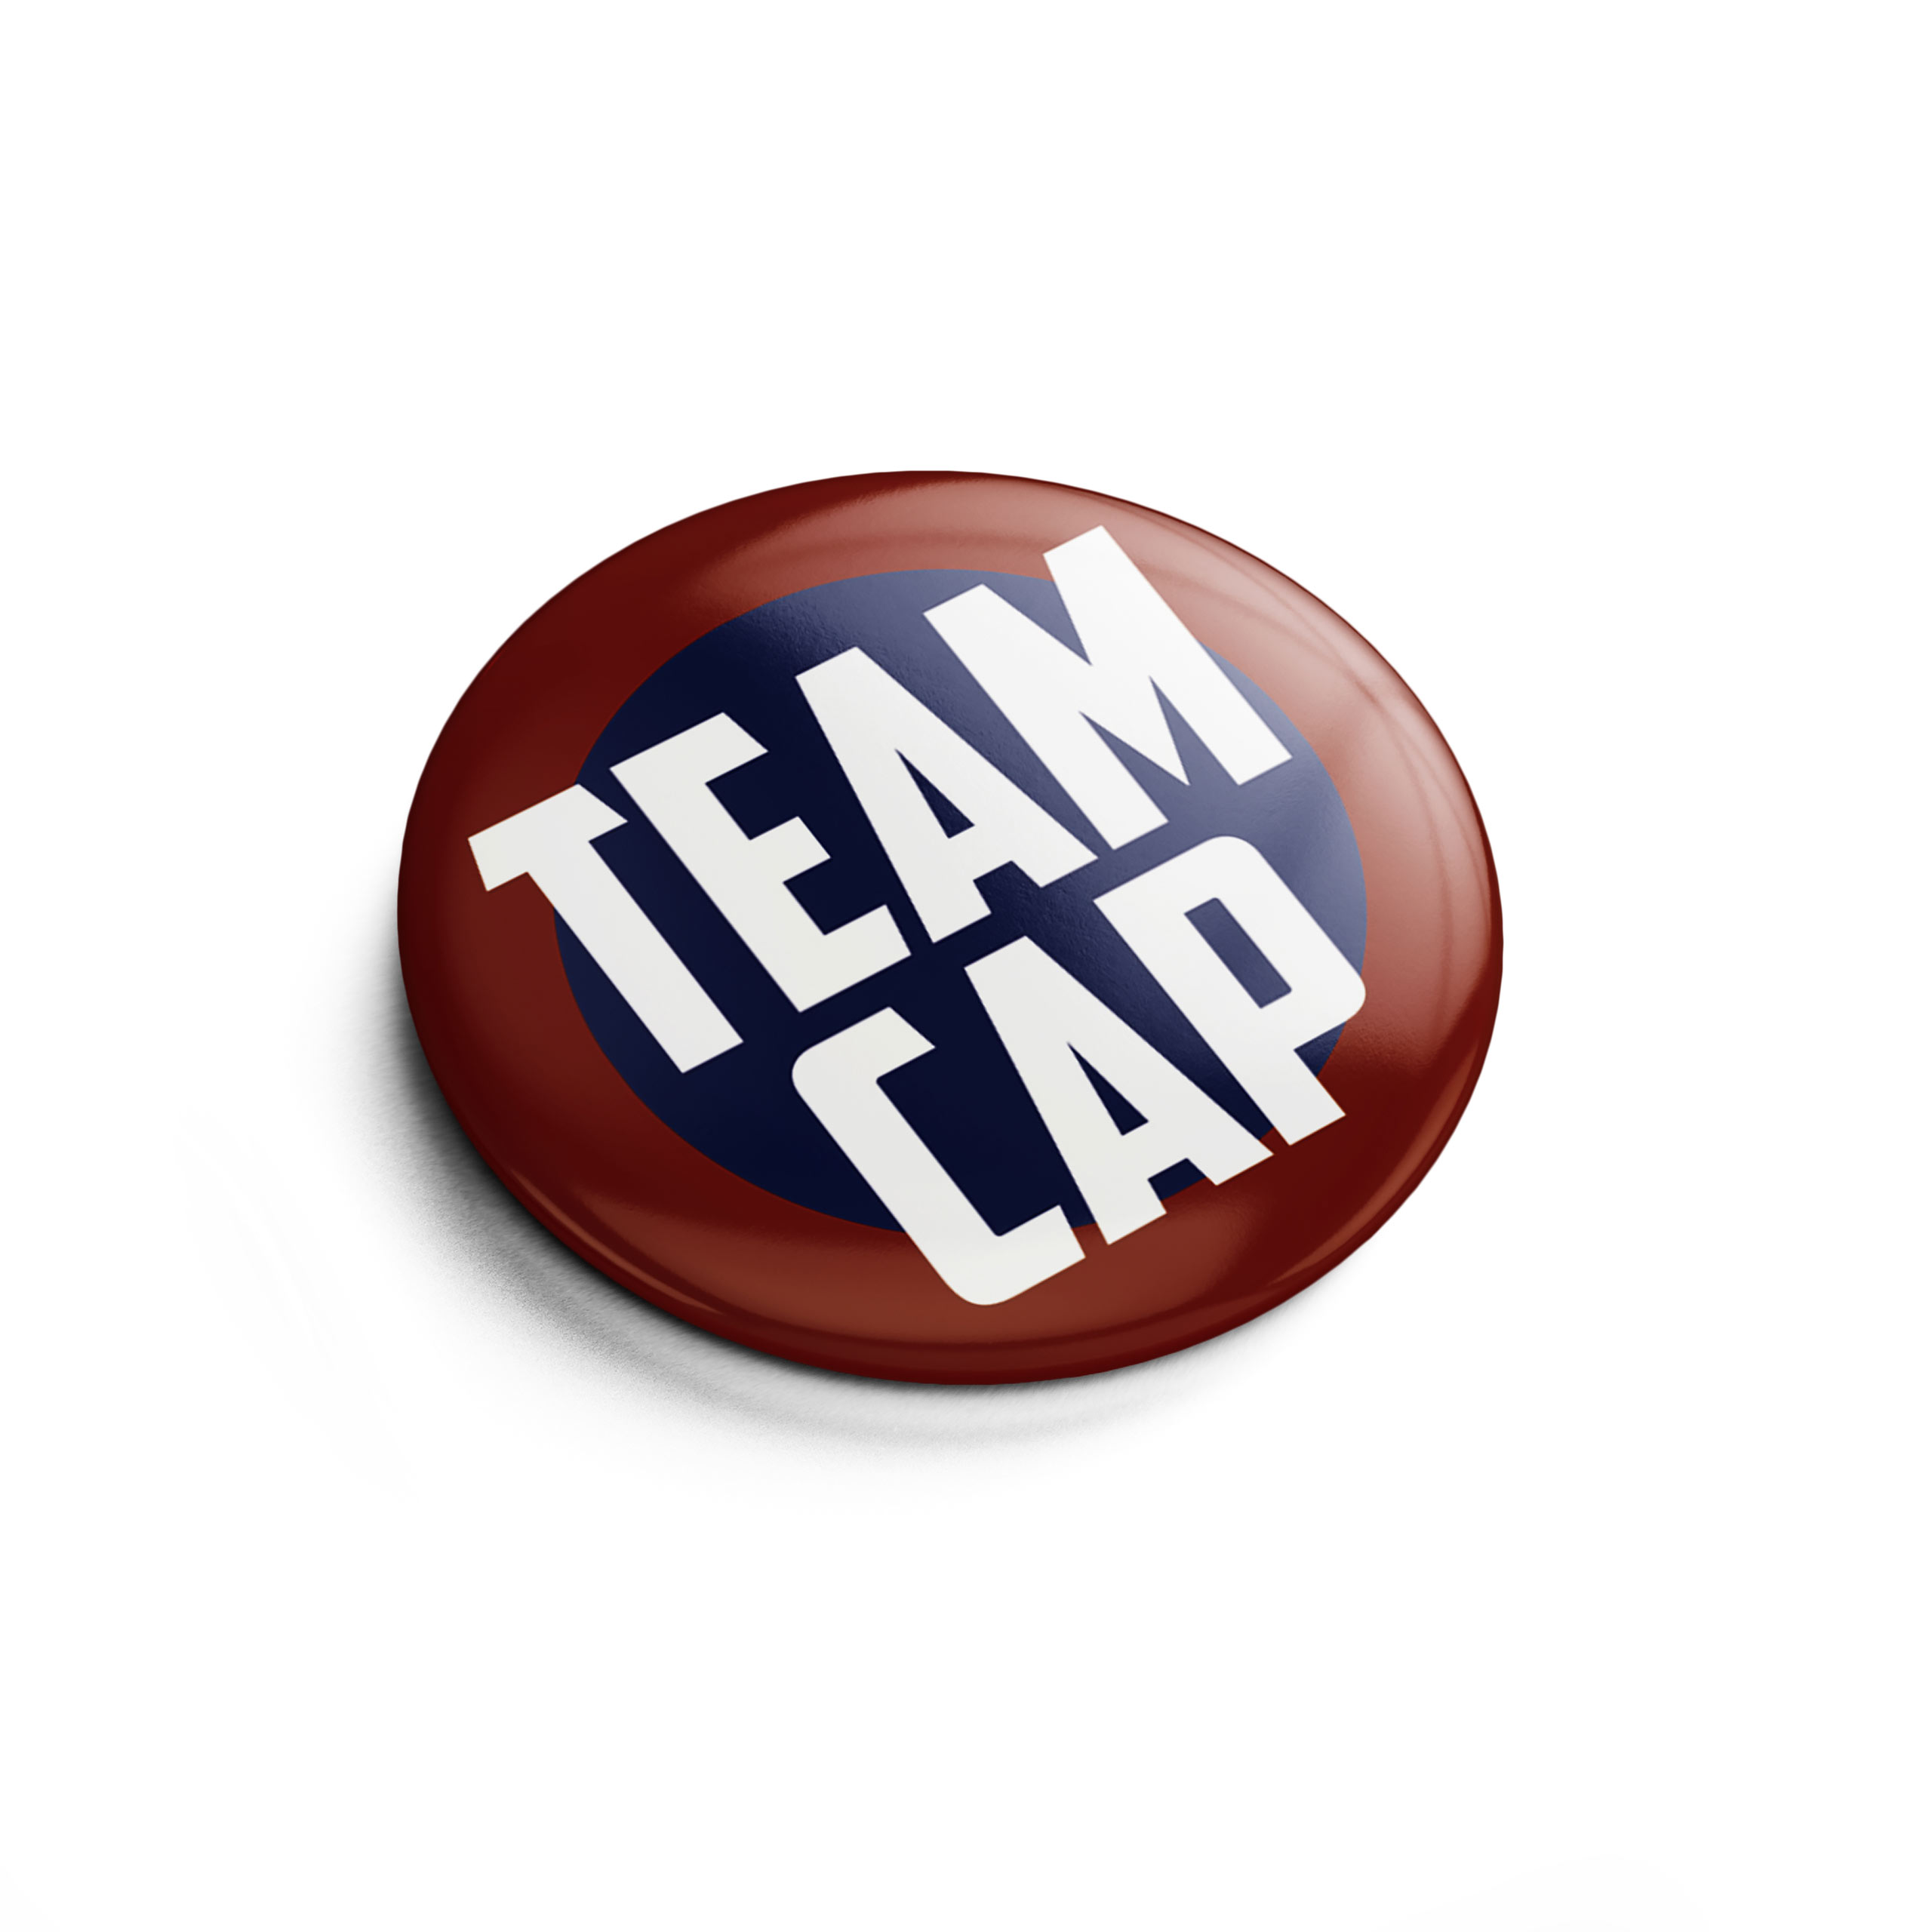 Team Cap Button für Captain America Fans